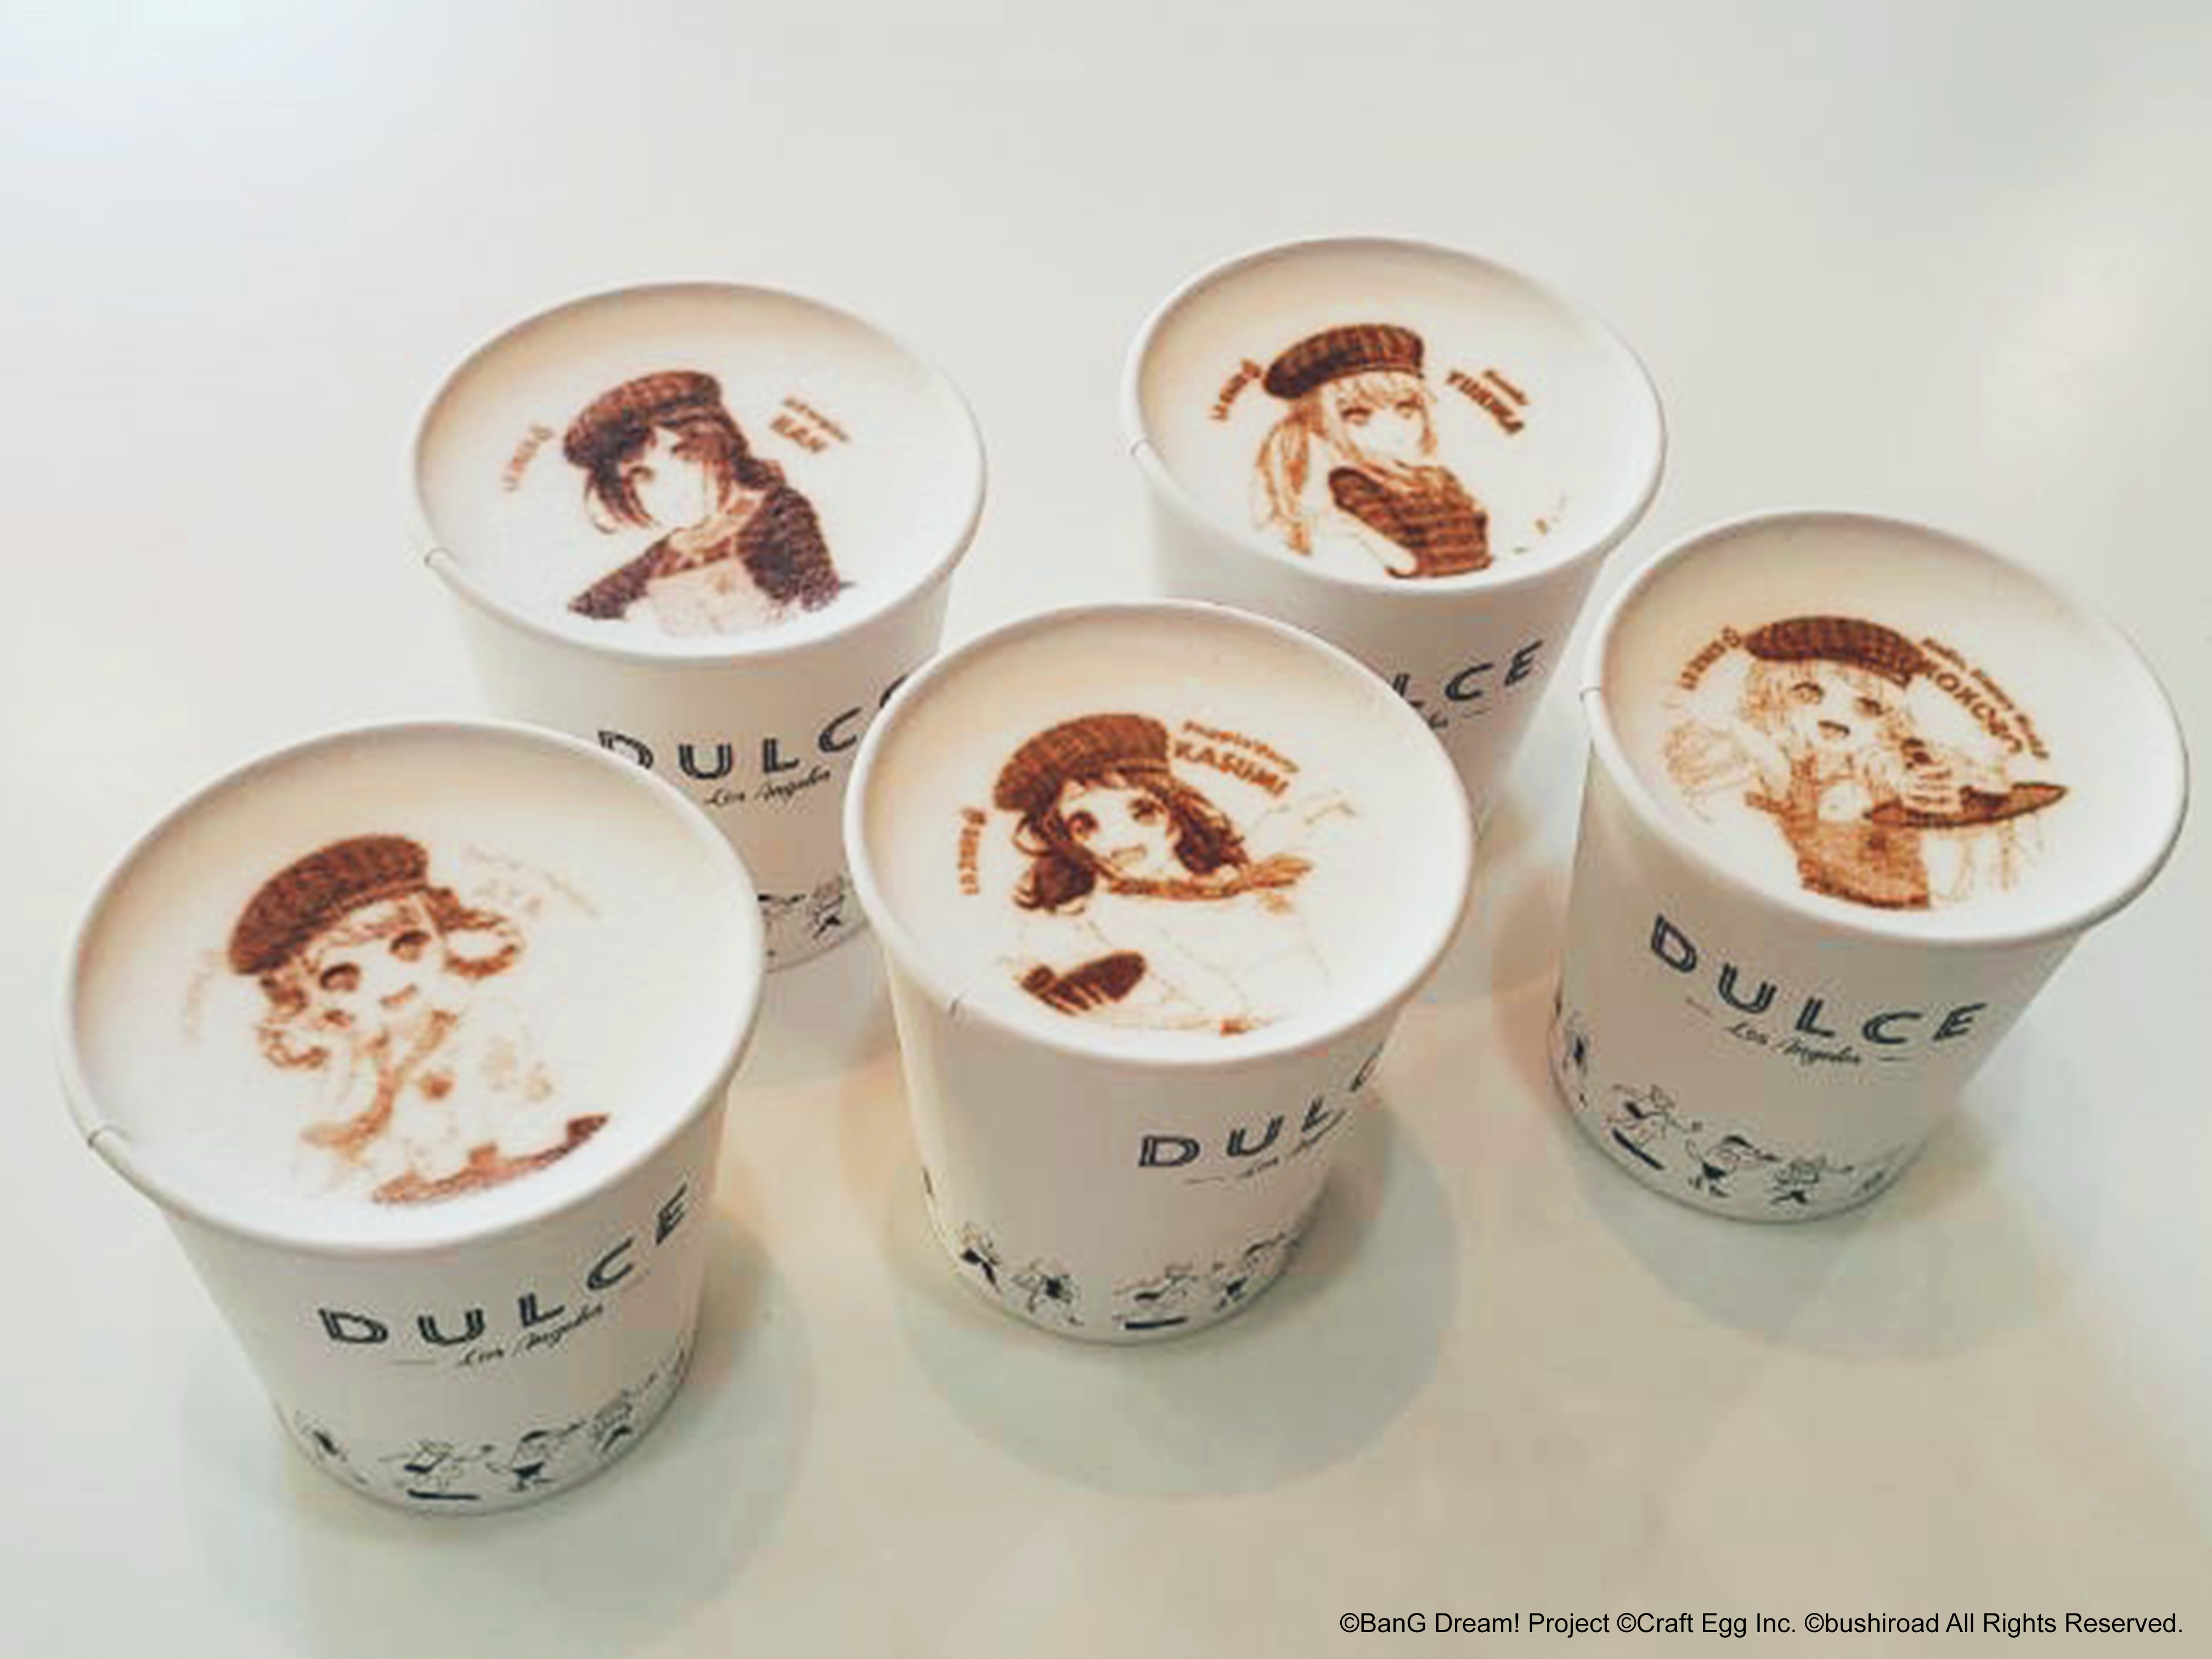 Bang Dream Collab Cafe Returns To Singapore This April